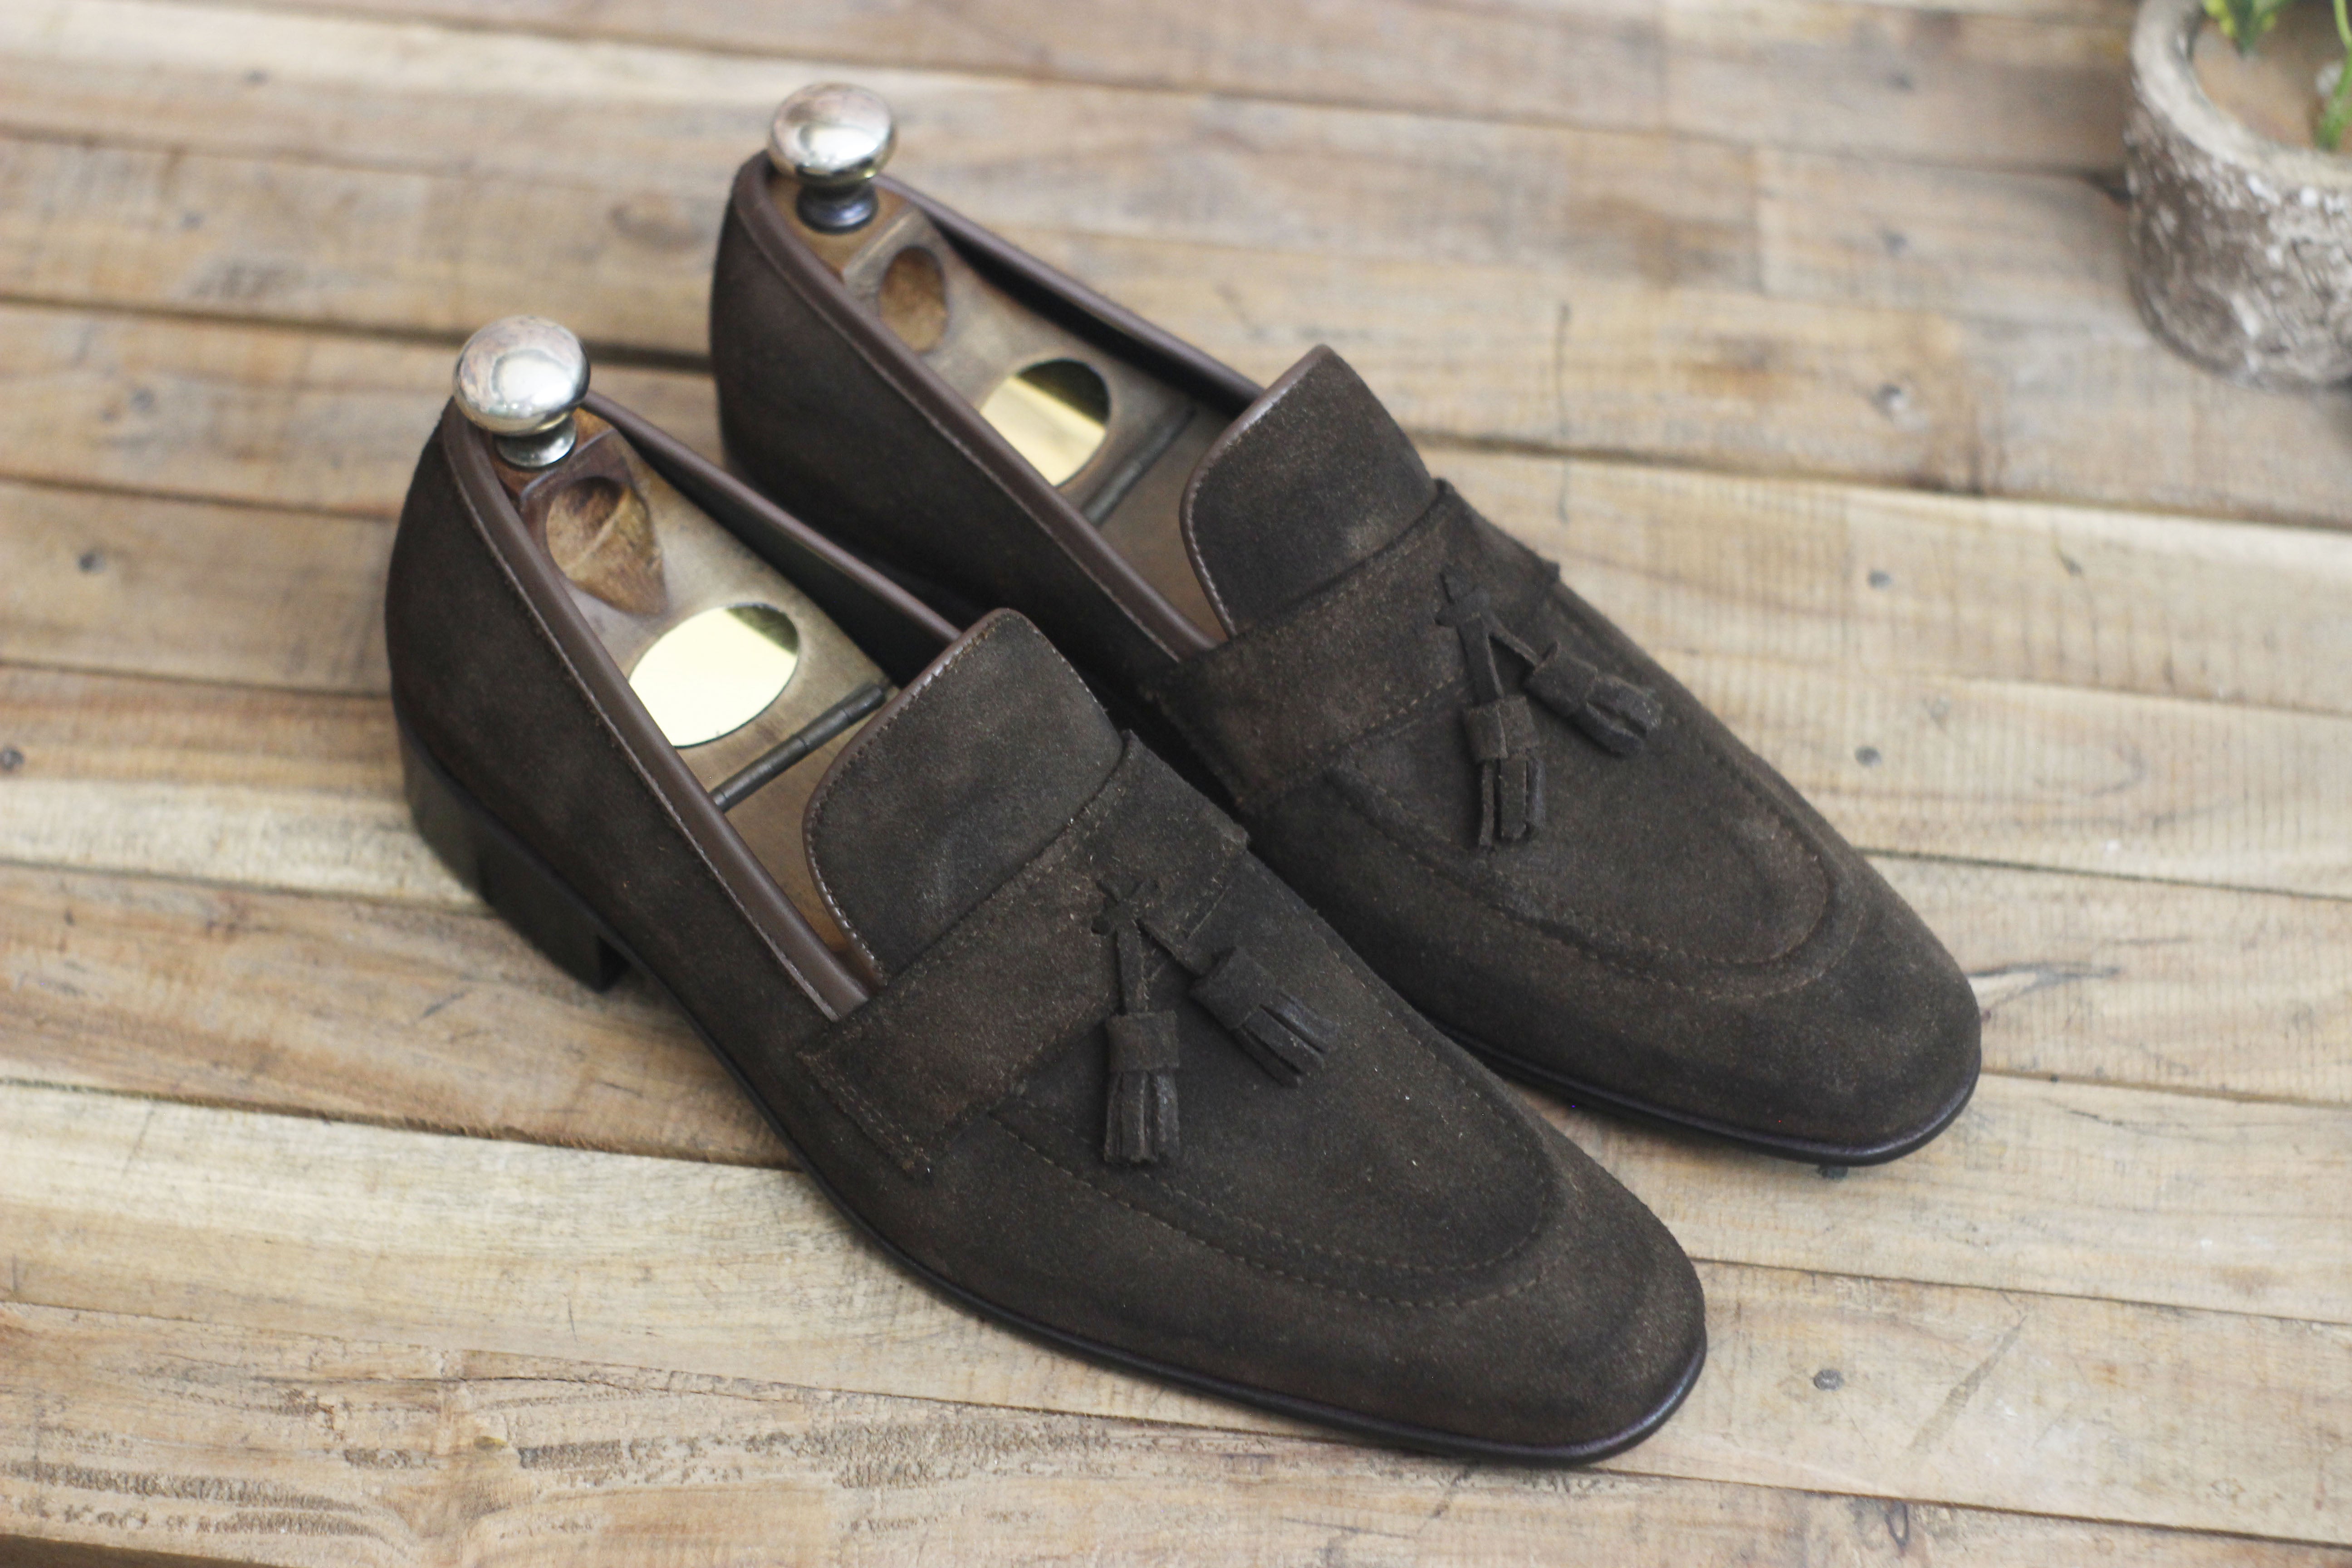 Handmade Men's Dark Brown Tassels Loafers Slips On Moccasin Shoes